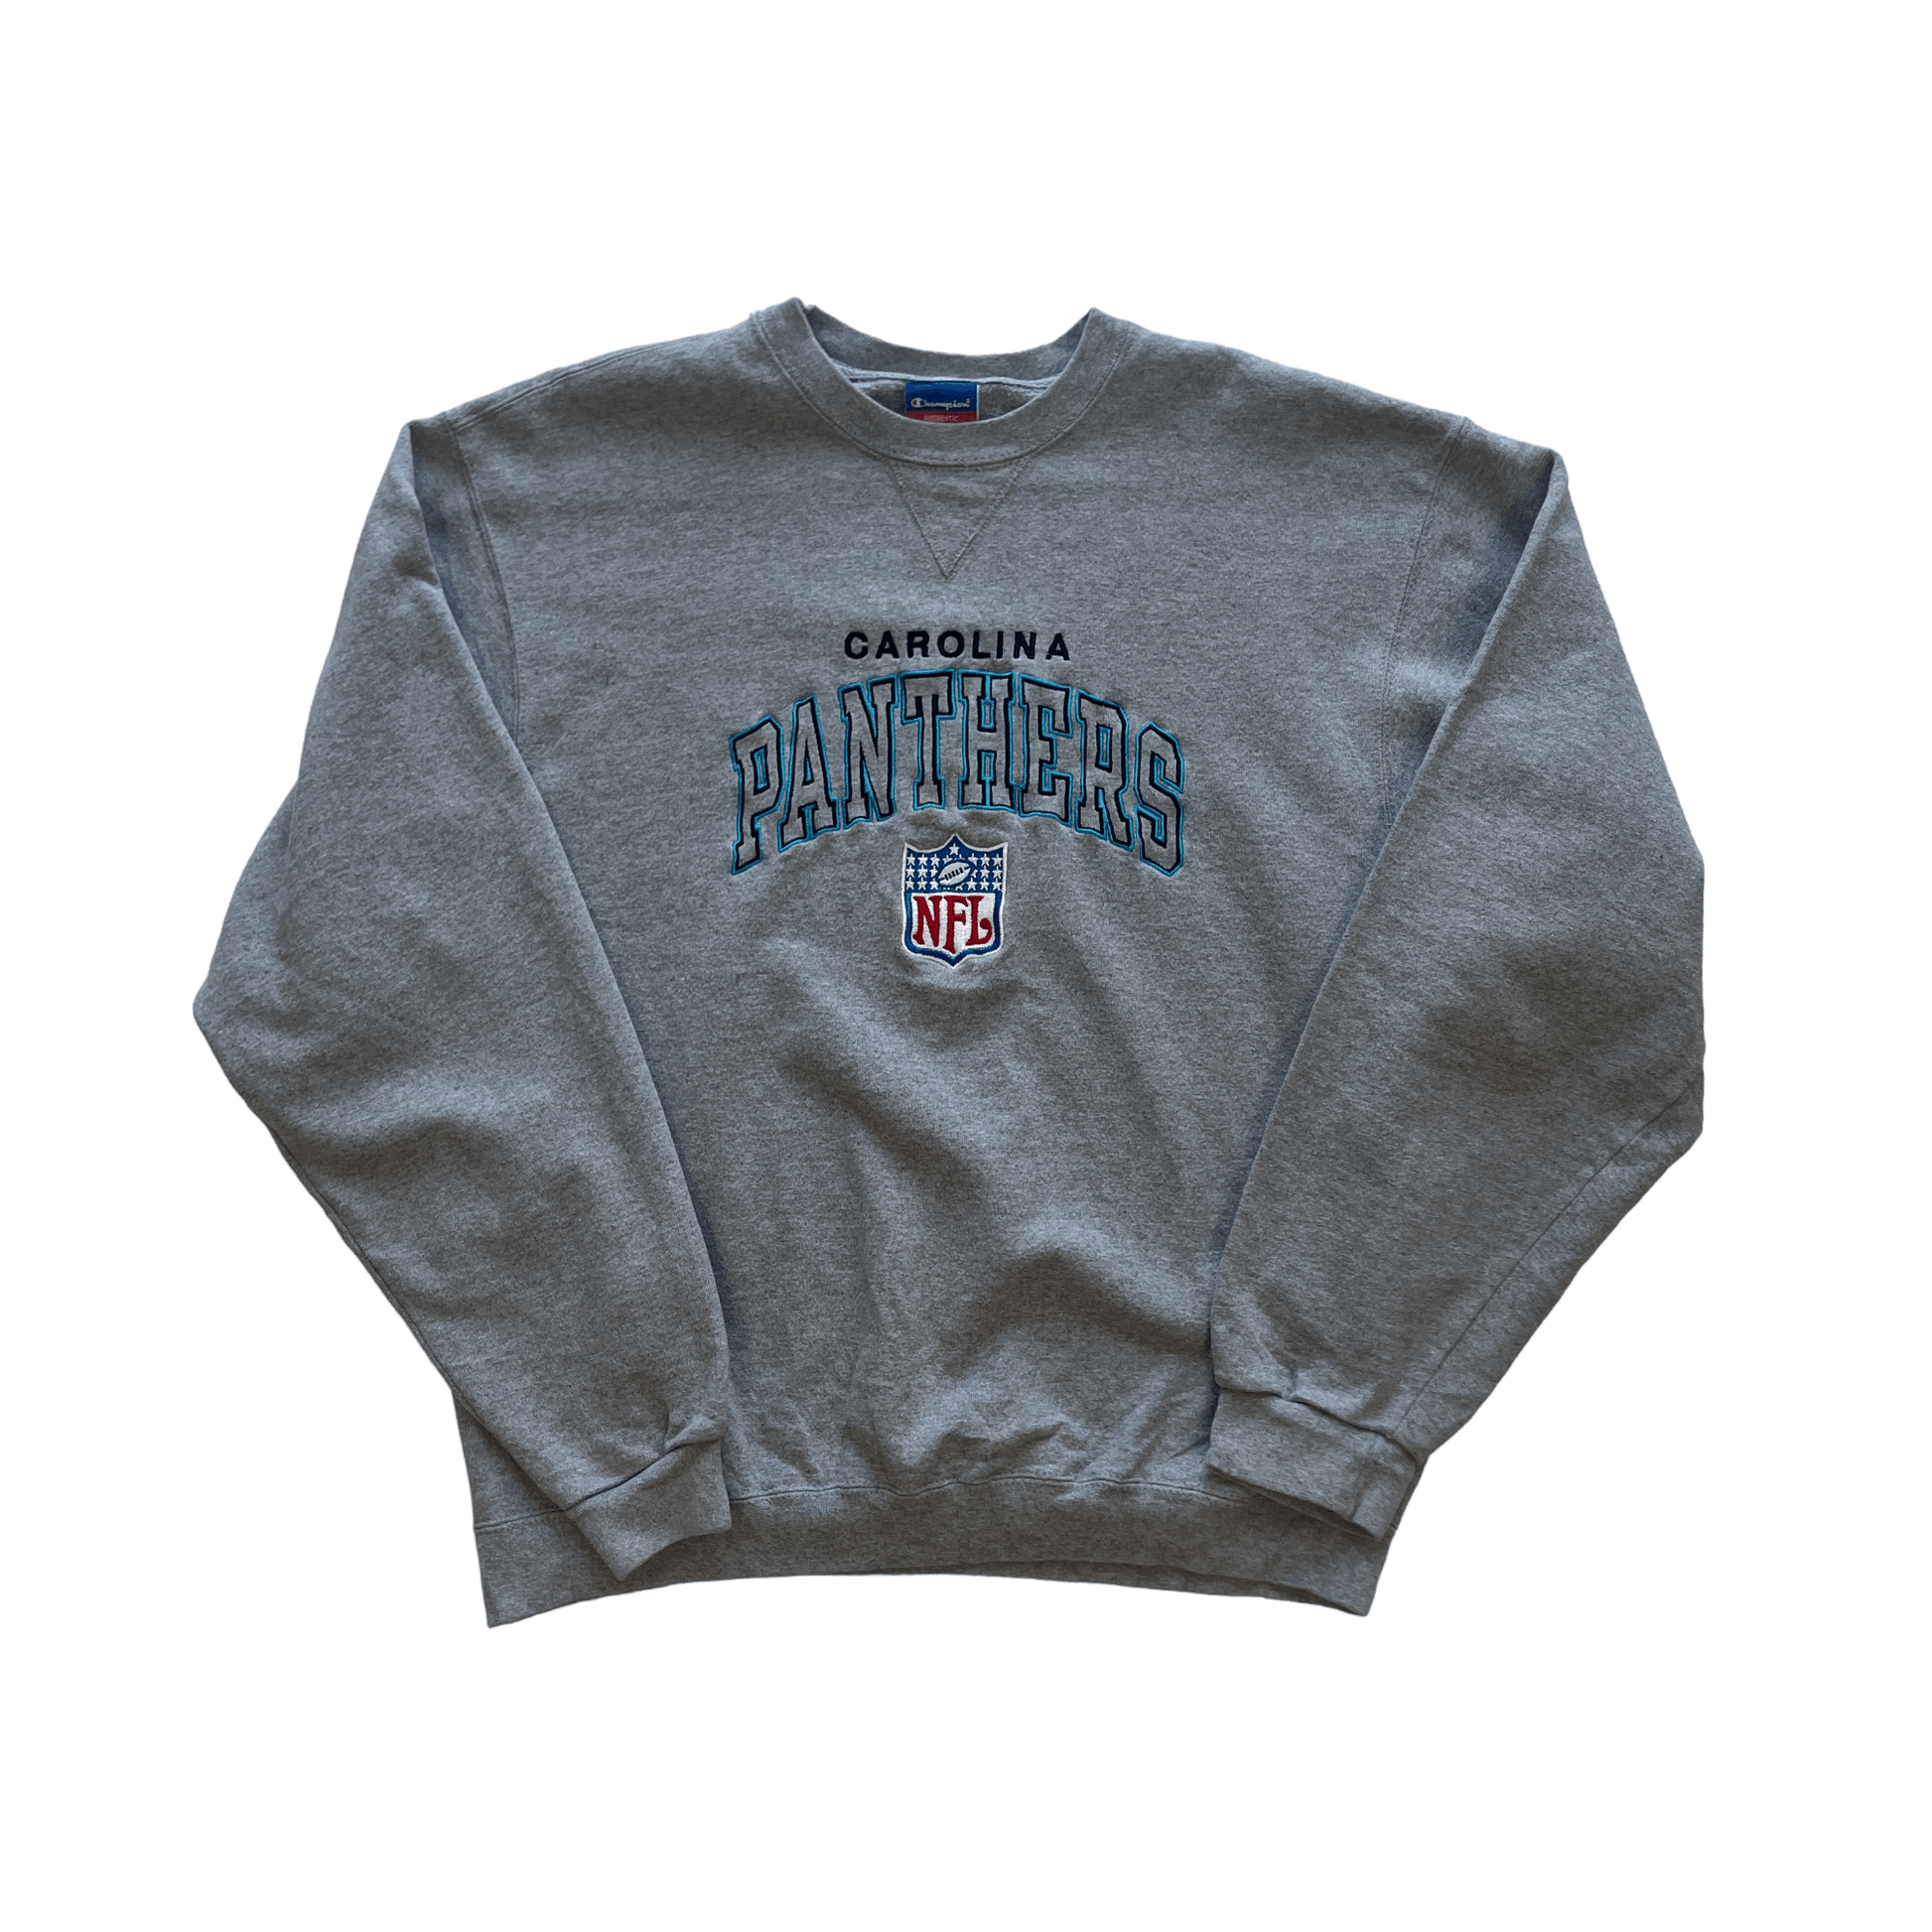 Vintage 90s Grey Champion NFL Panthers Sweatshirt - Large - The Streetwear Studio